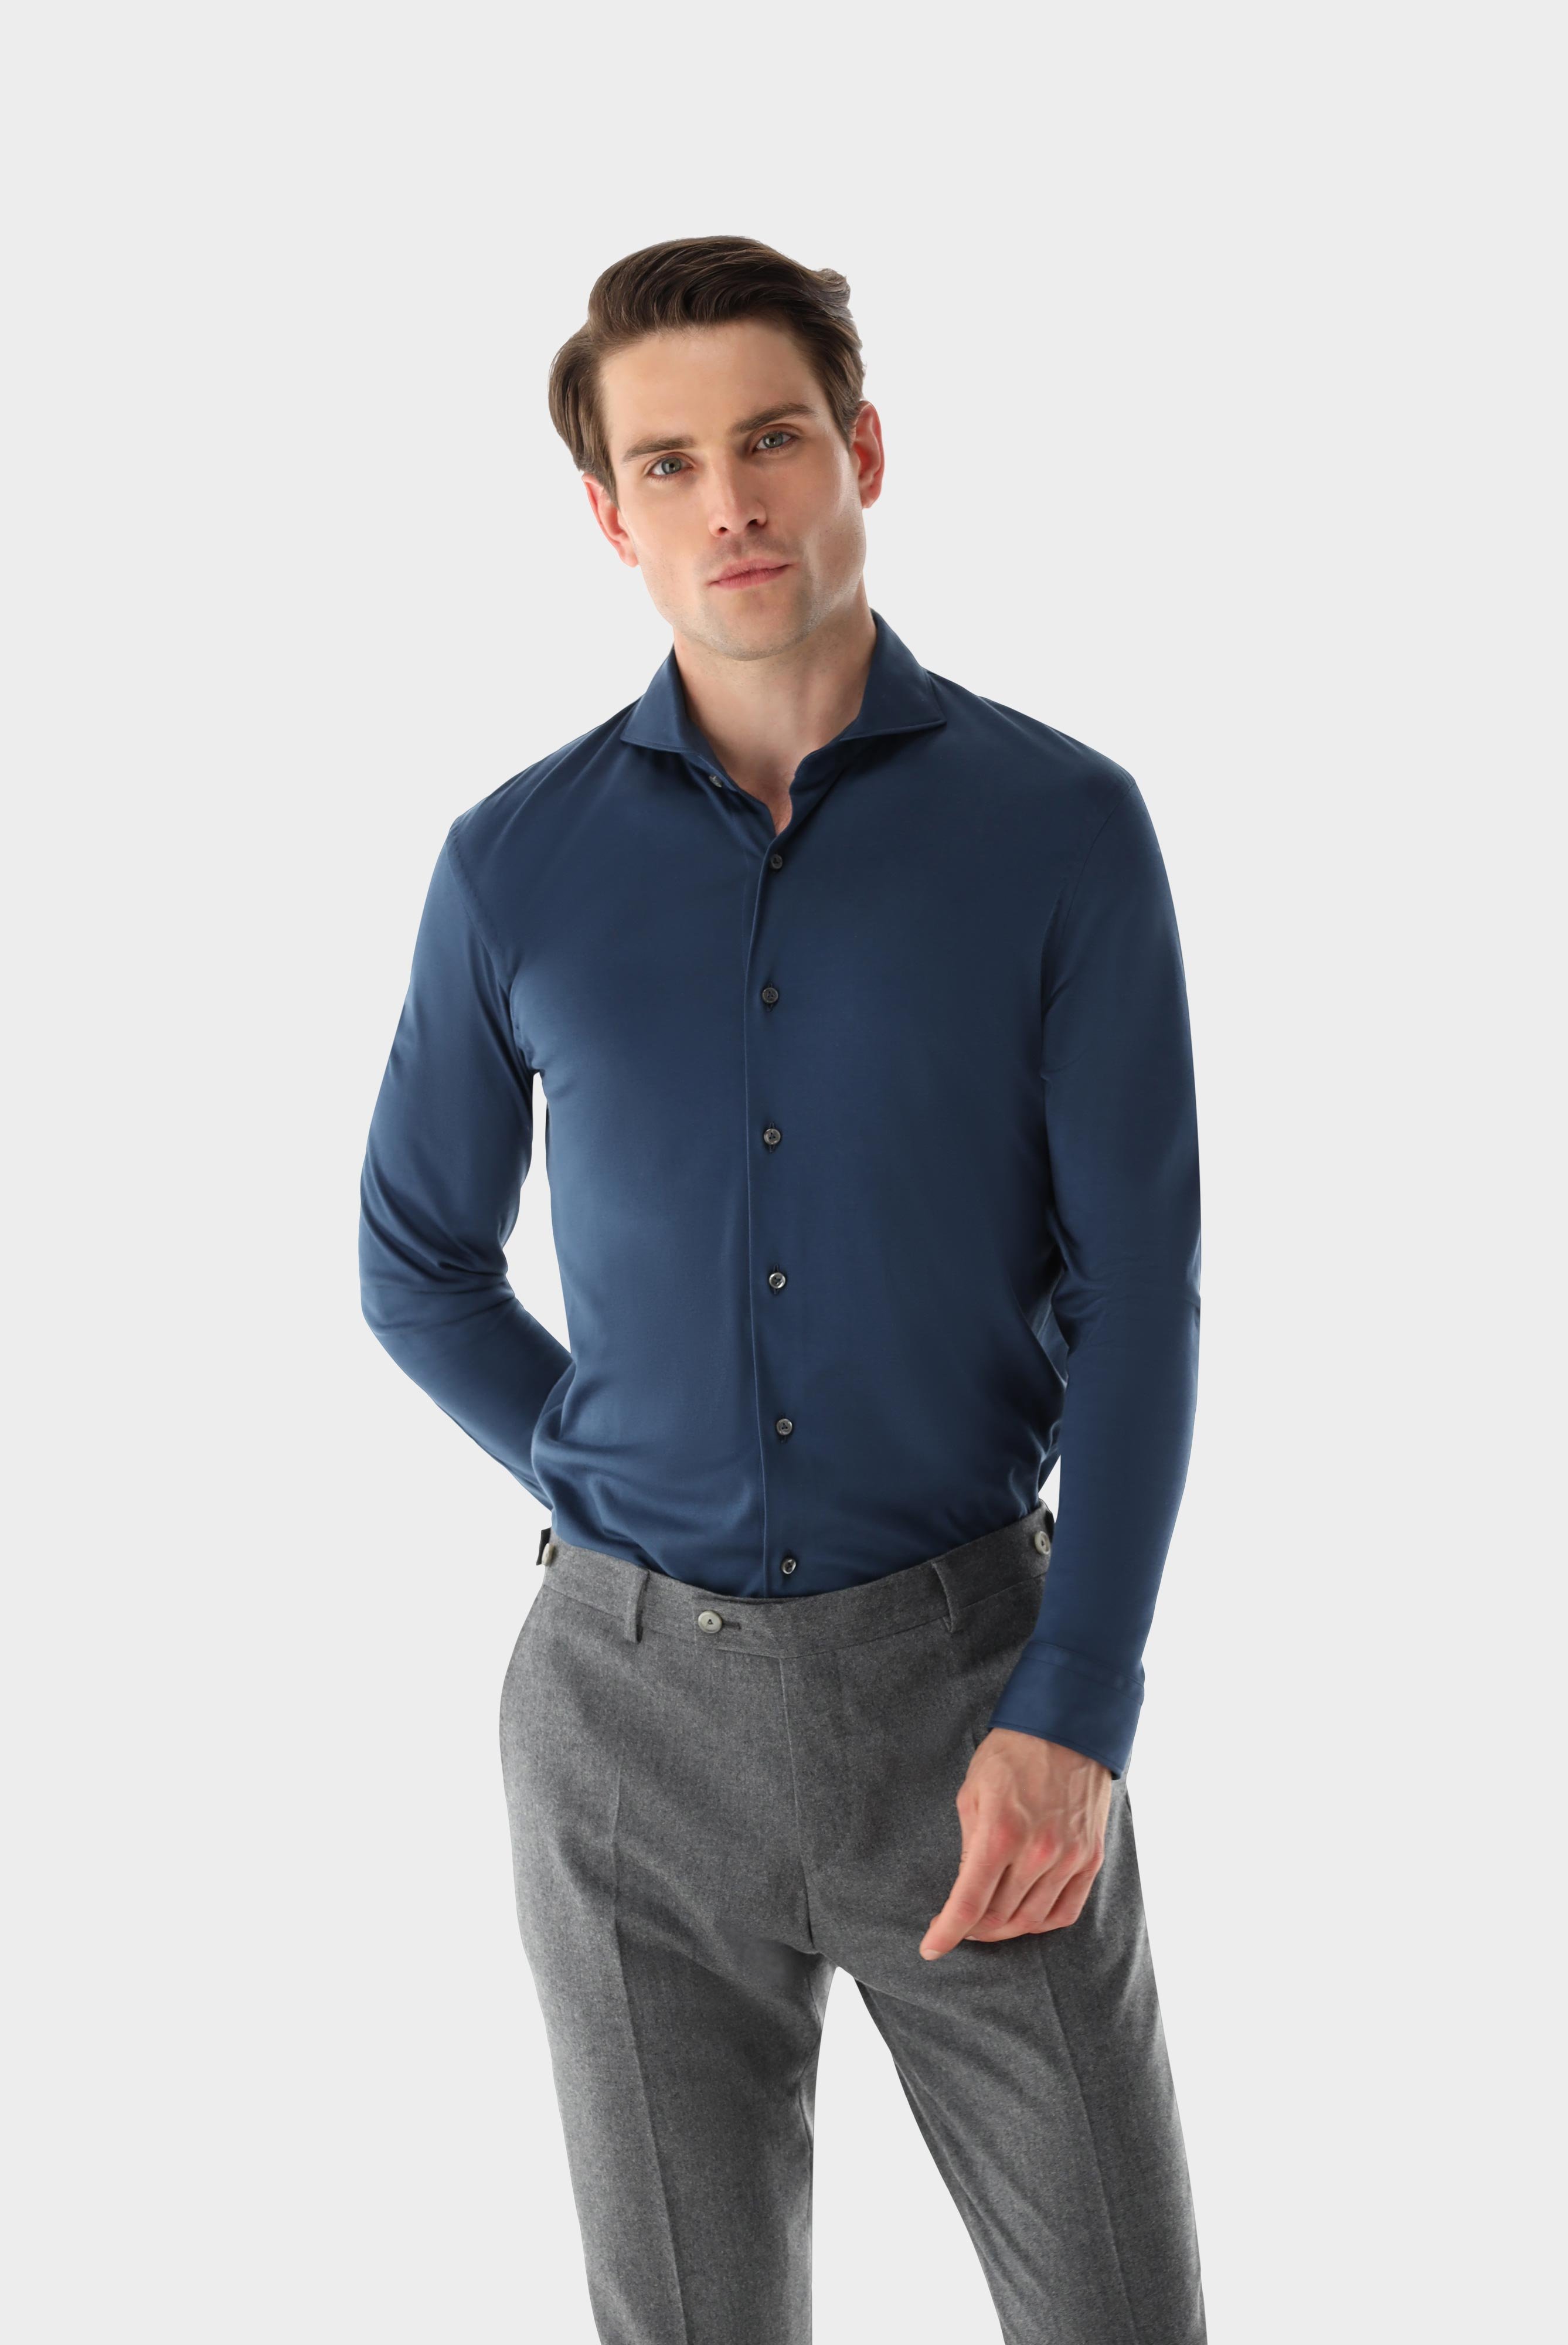 Casual Shirts+Jersey Shirt Swiss Cotton Tailor Fit+20.1683.UC.180031.780.XL